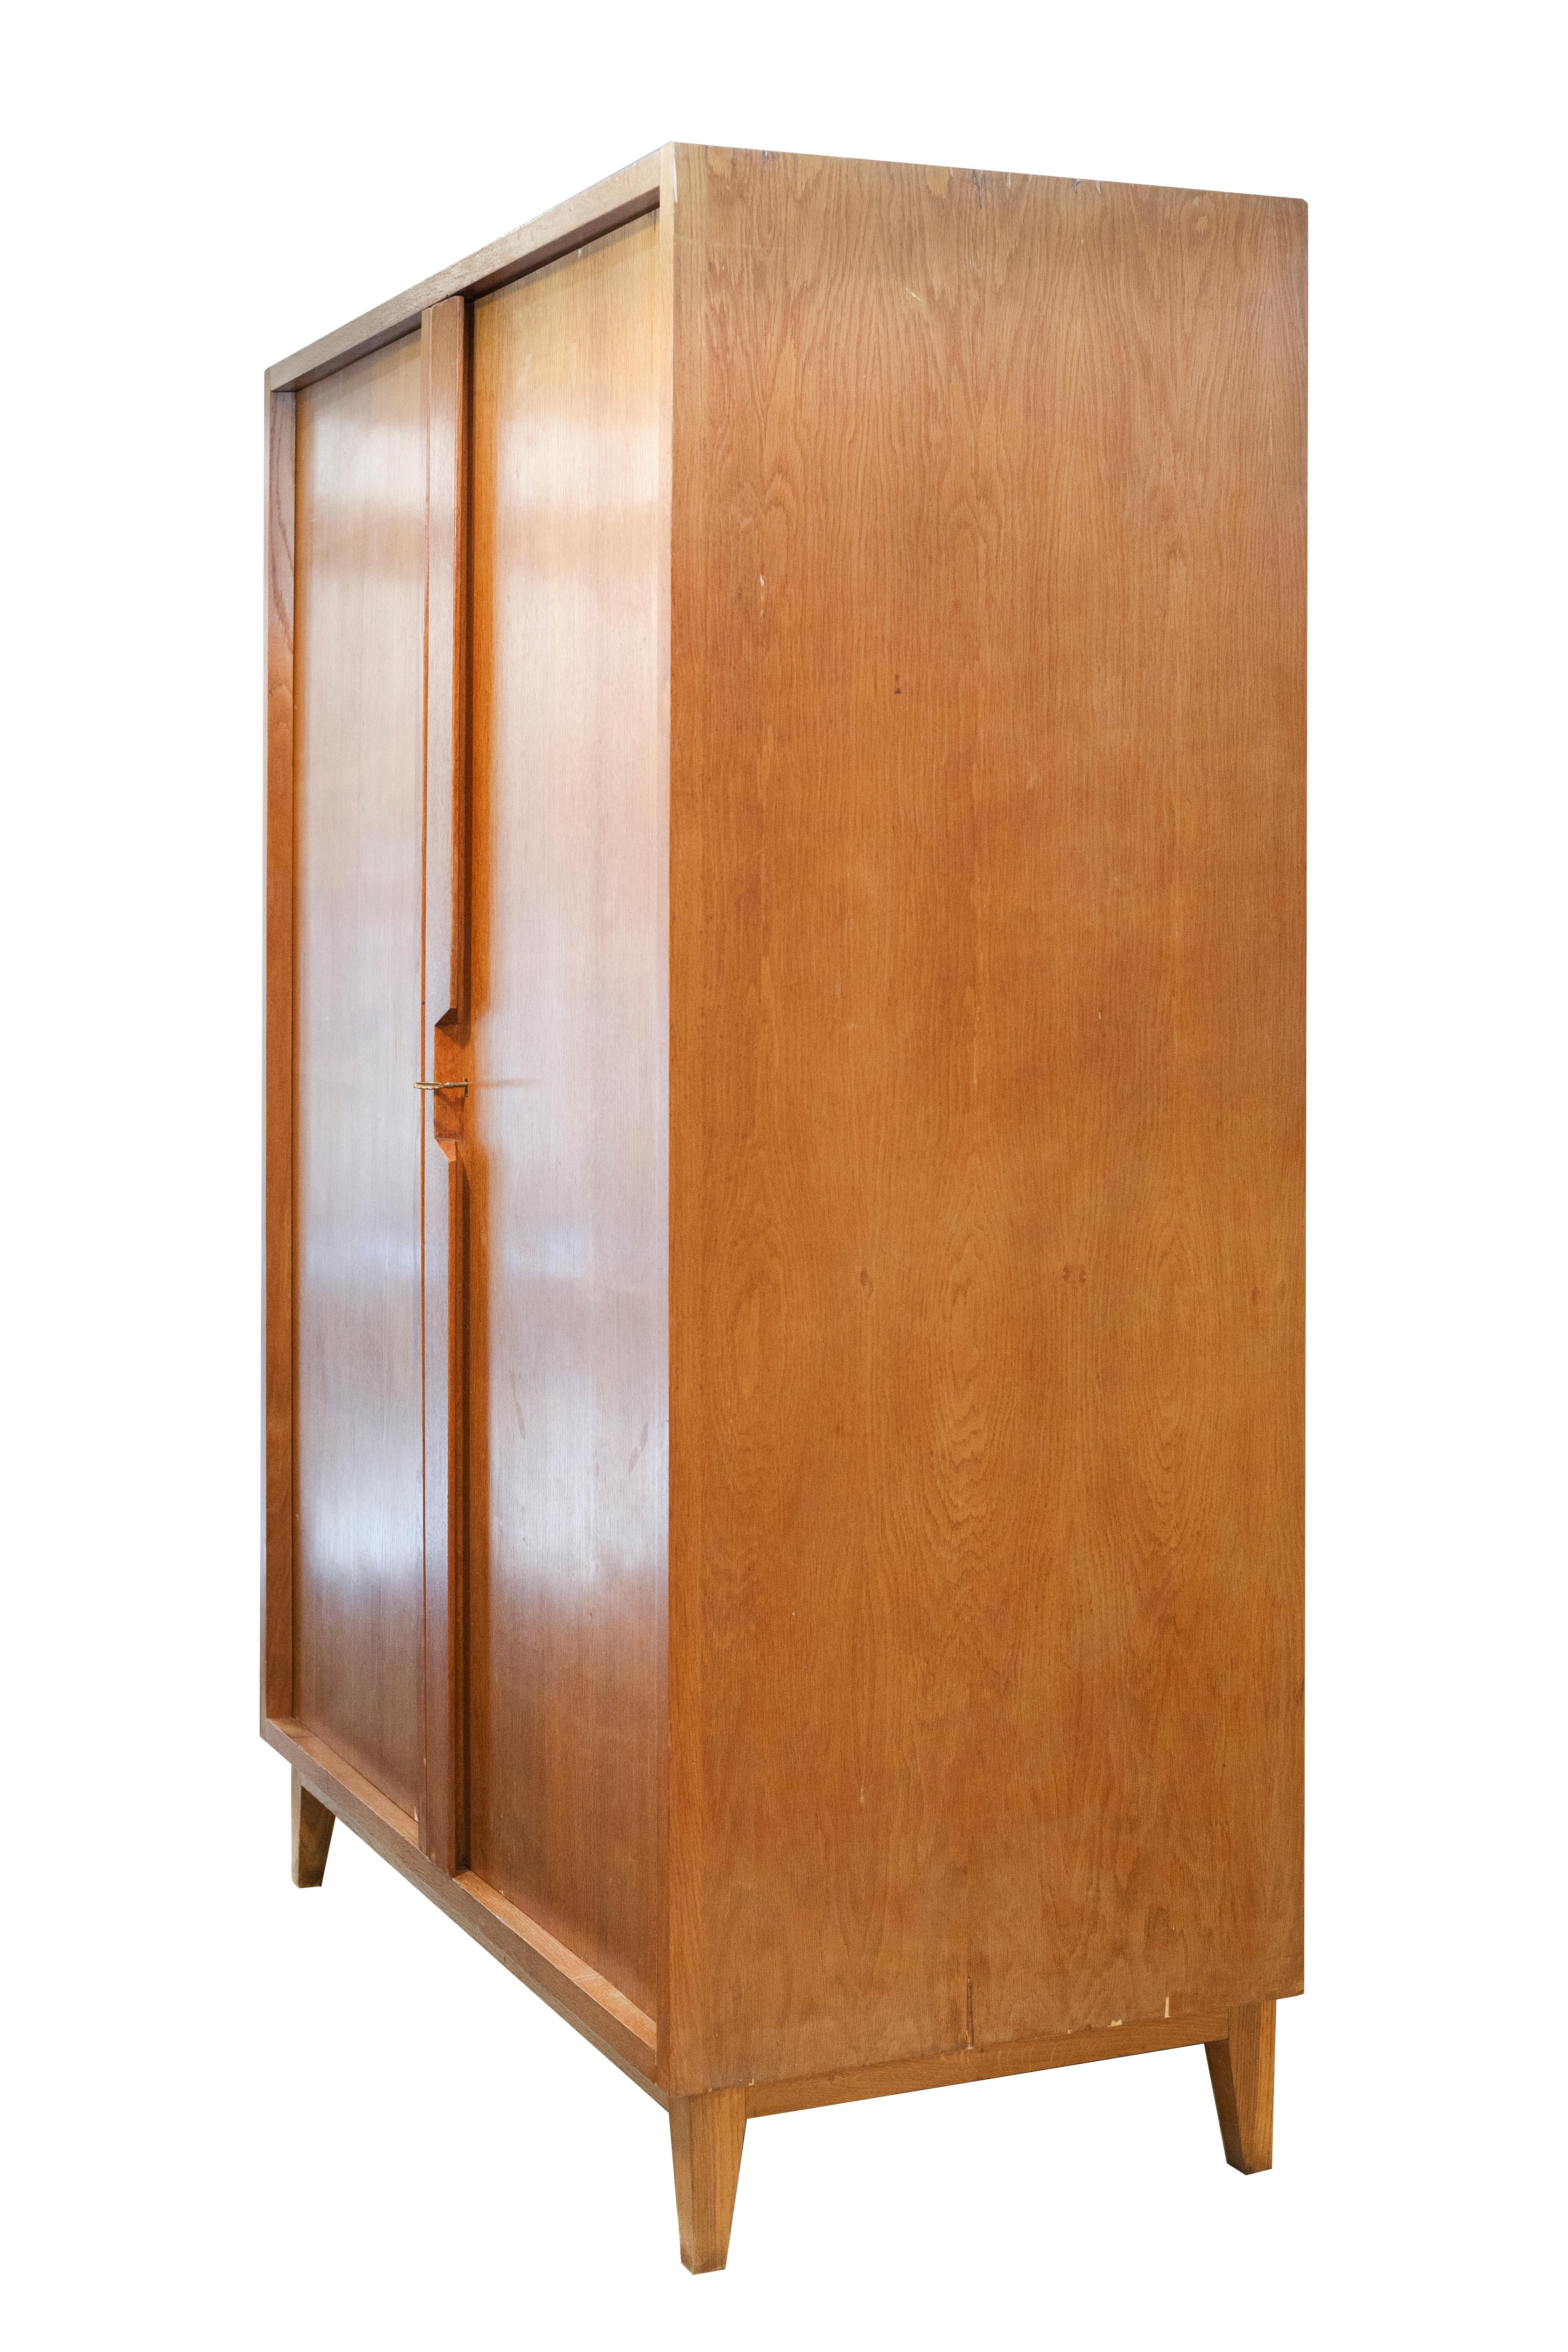 Italian Mid-Century Modern Satinwood Wardrobe with Shelves and Draws Style Gio Ponti